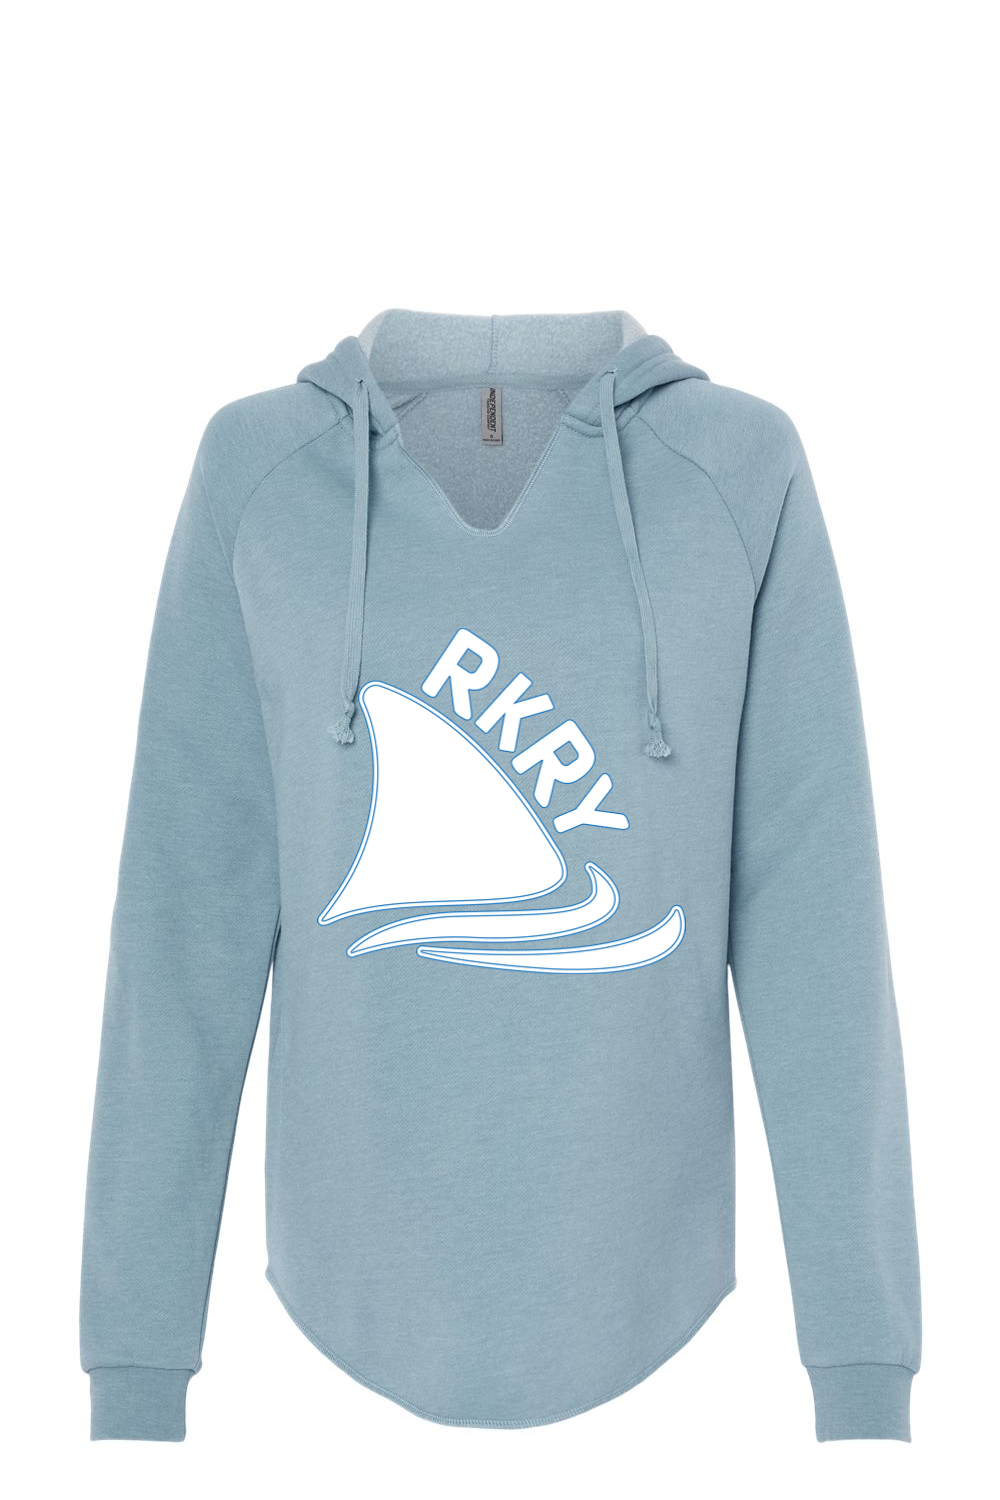 RKRY Independent Trading Co. Women’s Lightweight California Wave Wash Hooded Sweatshirt